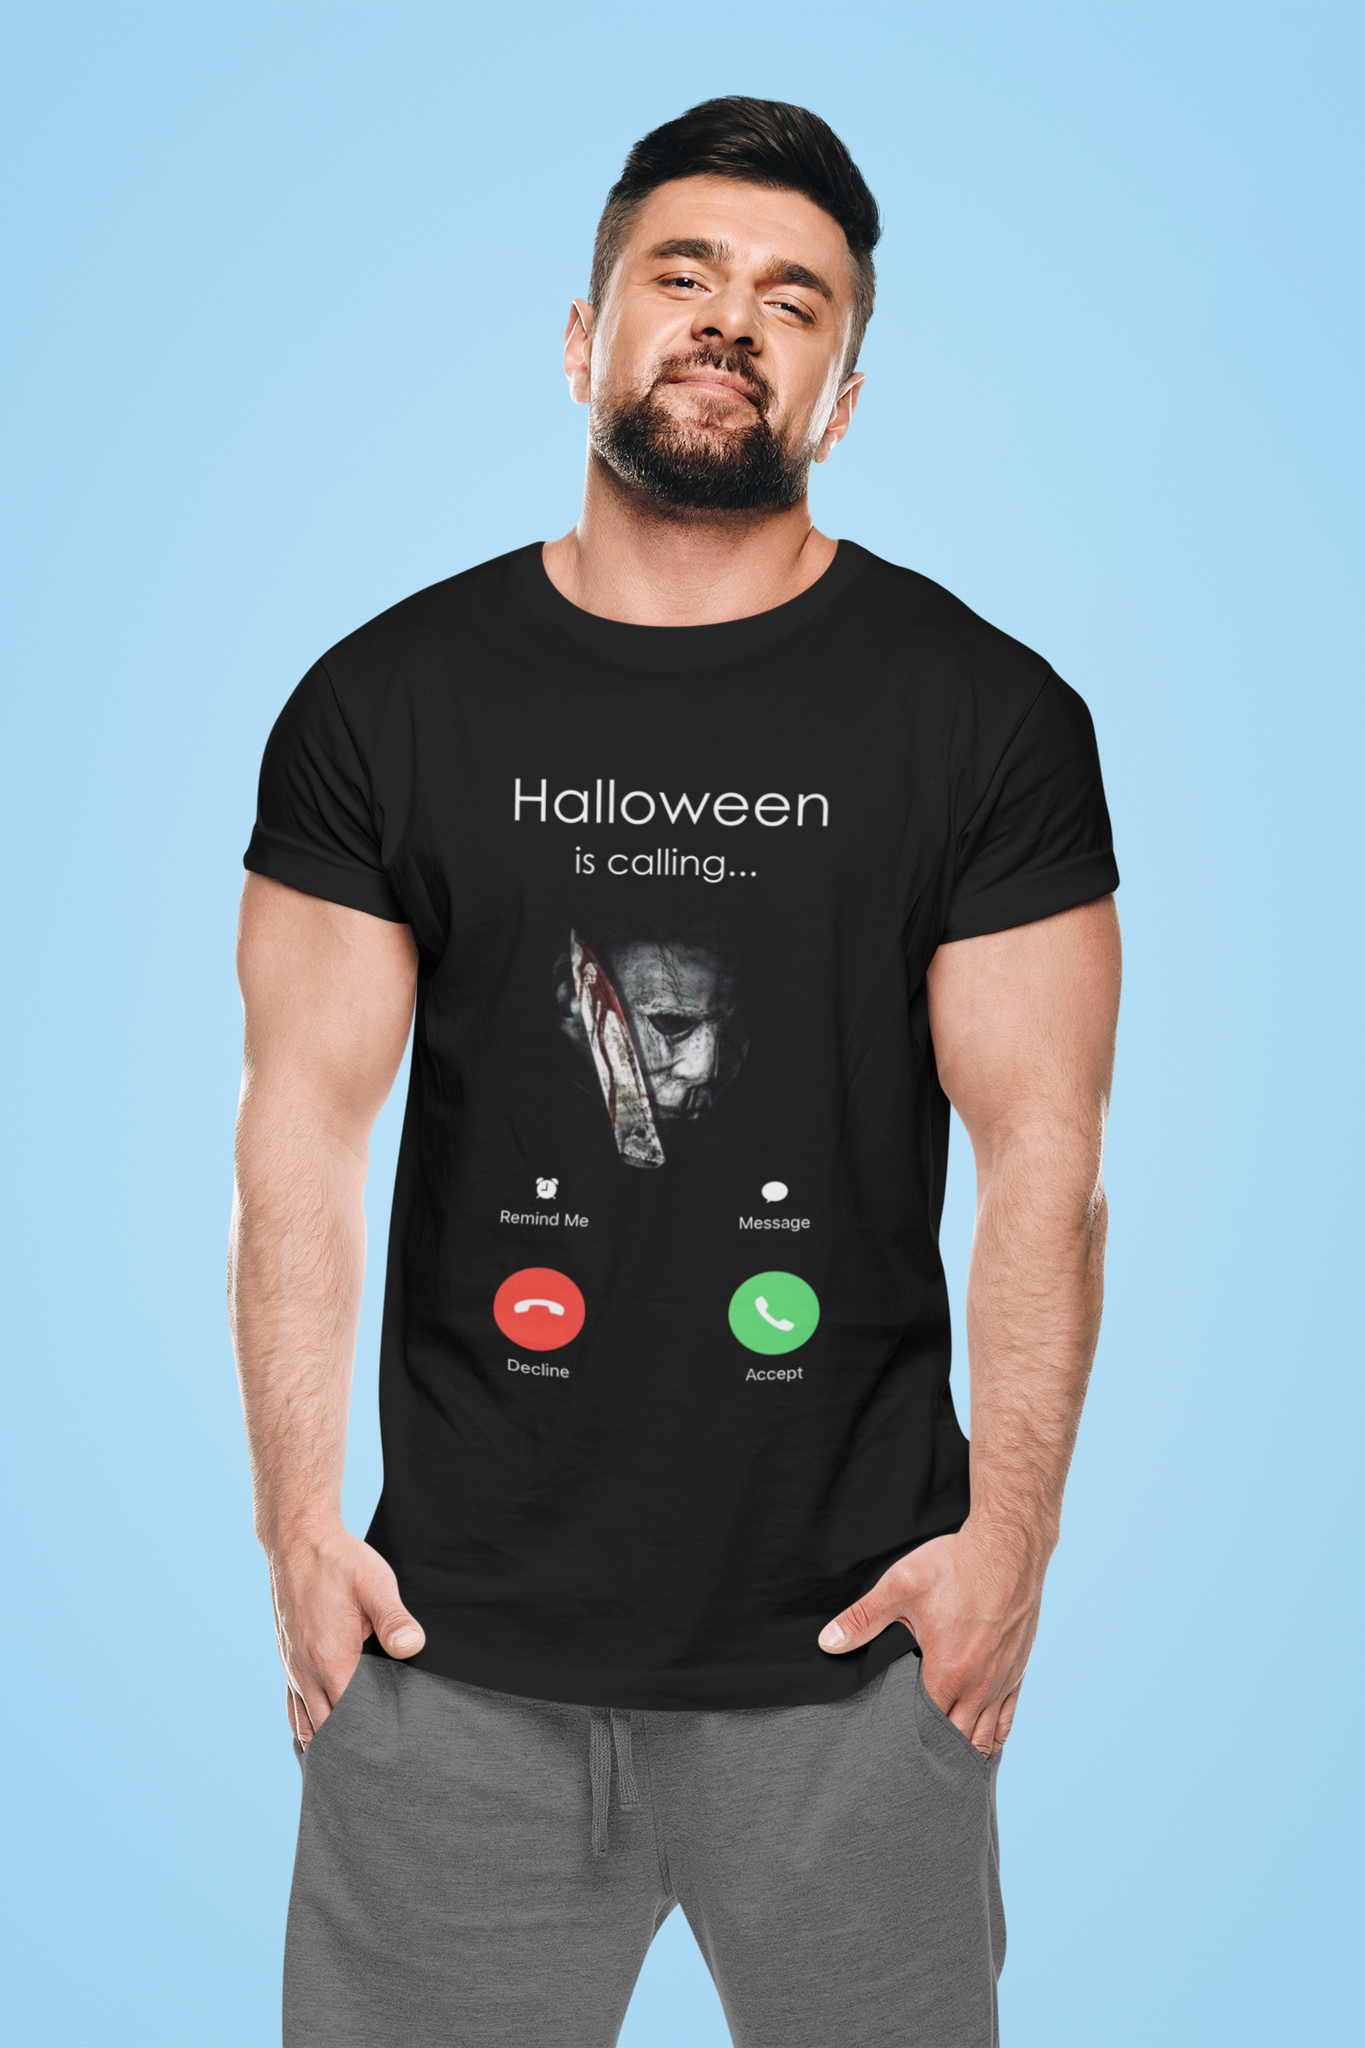 Halloween T Shirt, Halloween Is Calling Tshirt, Michael Myers T Shirt, Halloween Gifts